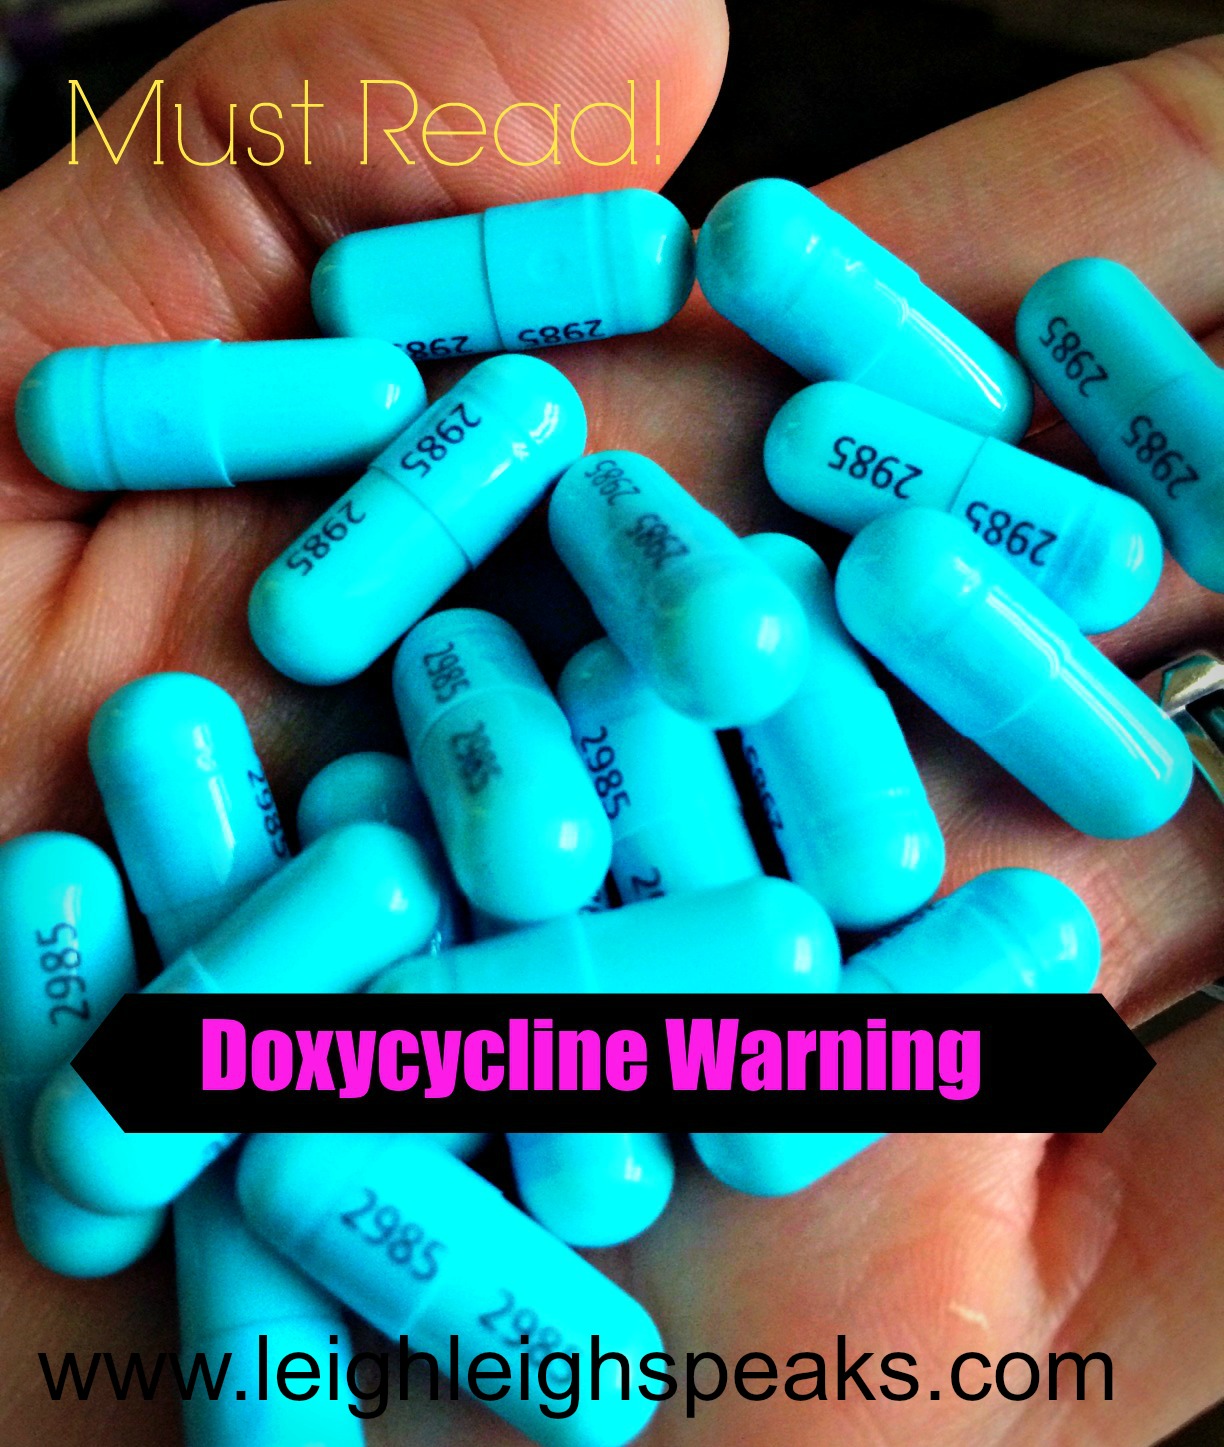 Doxycycline Hyclate side effects